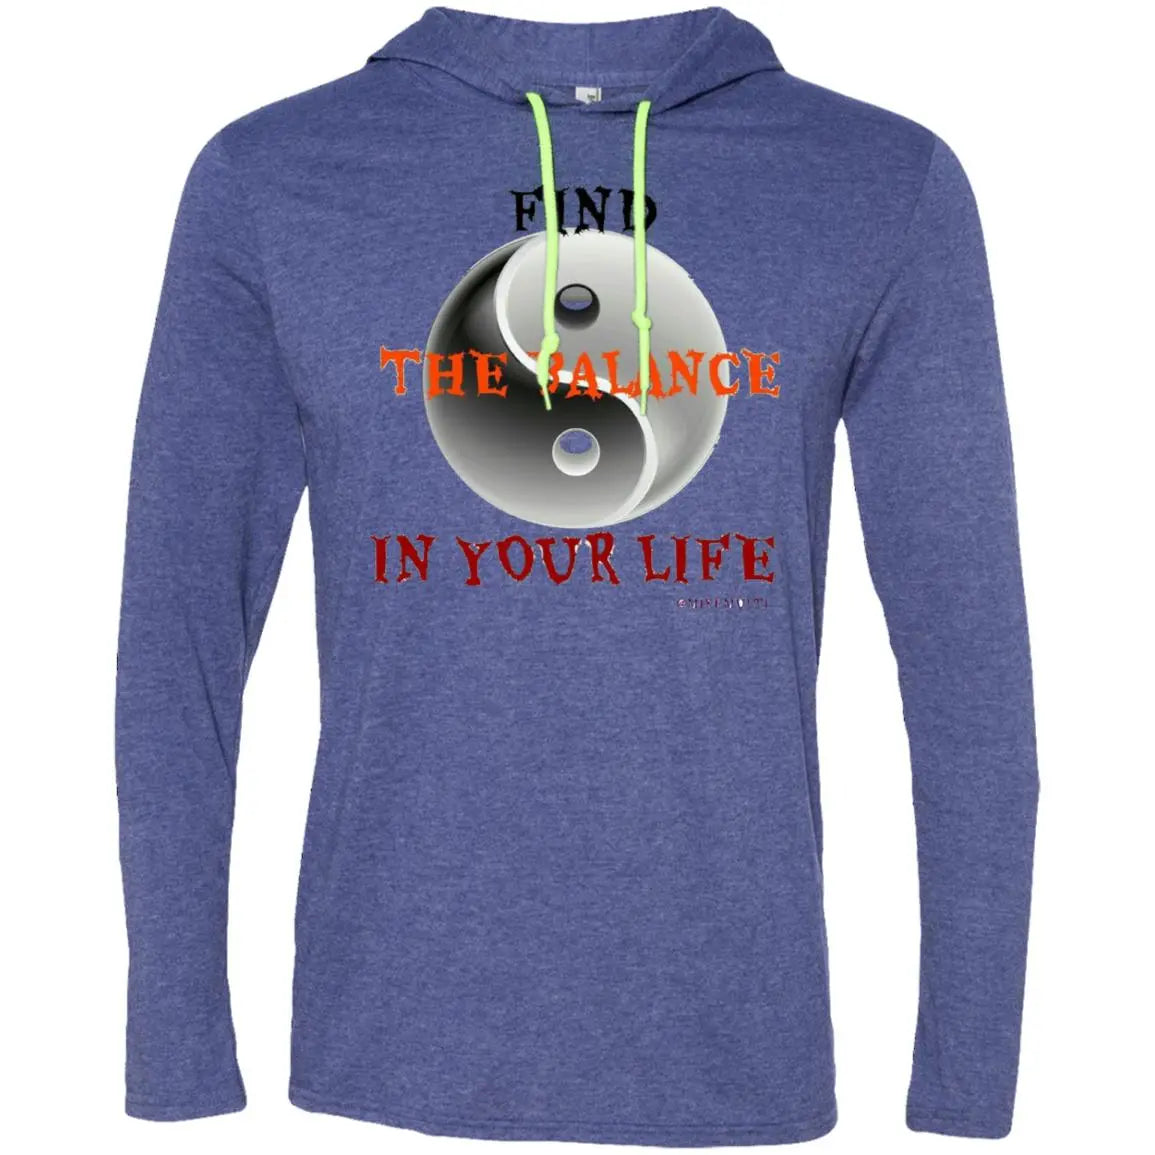 Find The Balance In Your Life - Men's LS T-Shirt Hoodie CustomCat